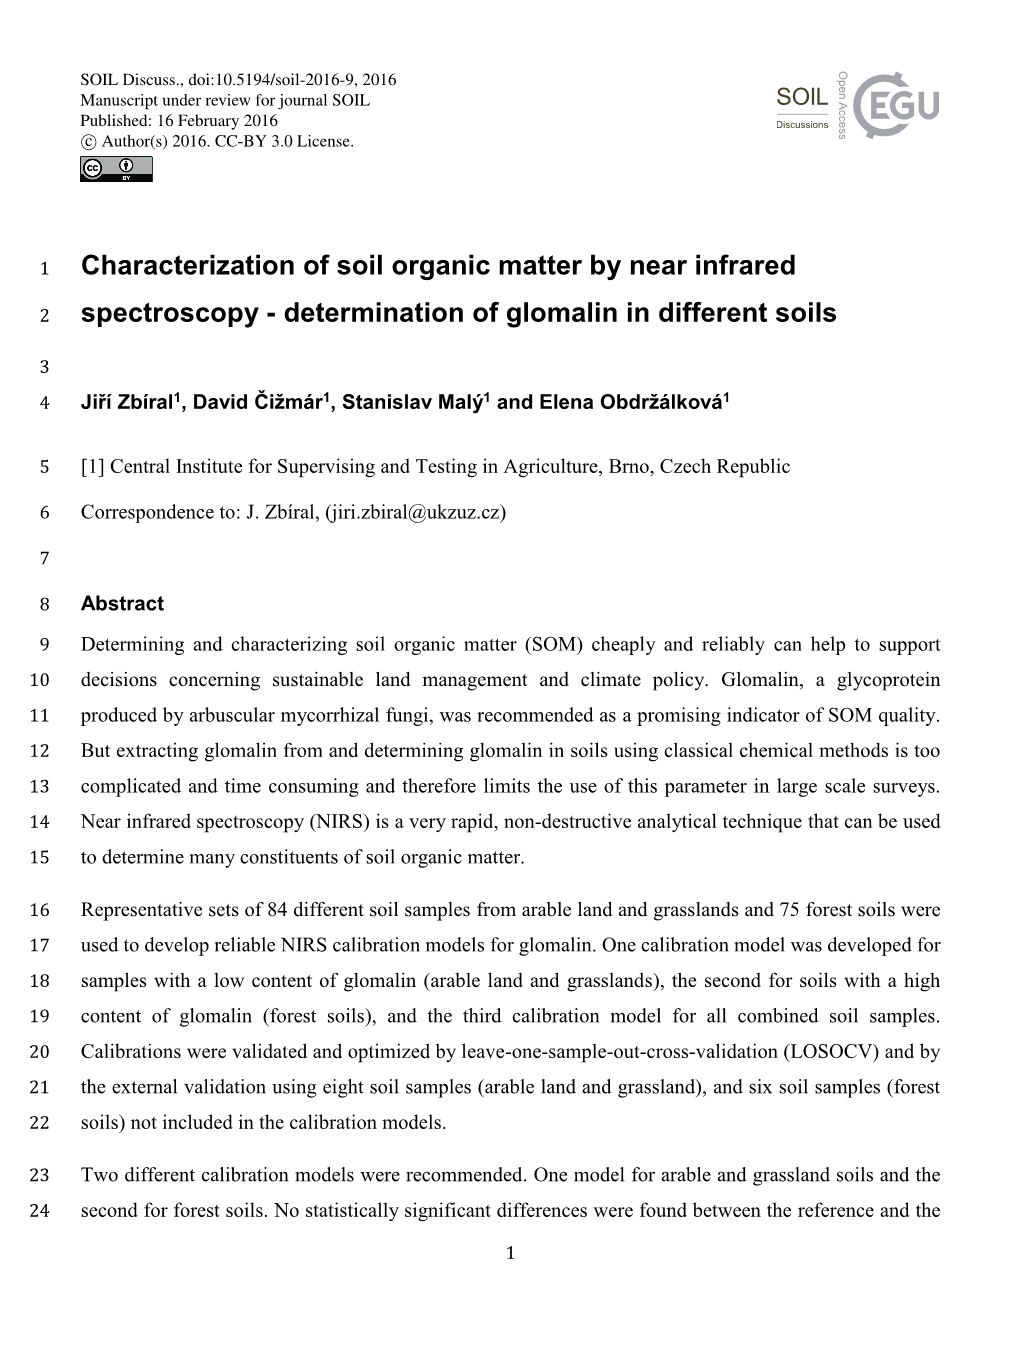 Characterization of Soil Organic Matter by Near Infrared Spectroscopy